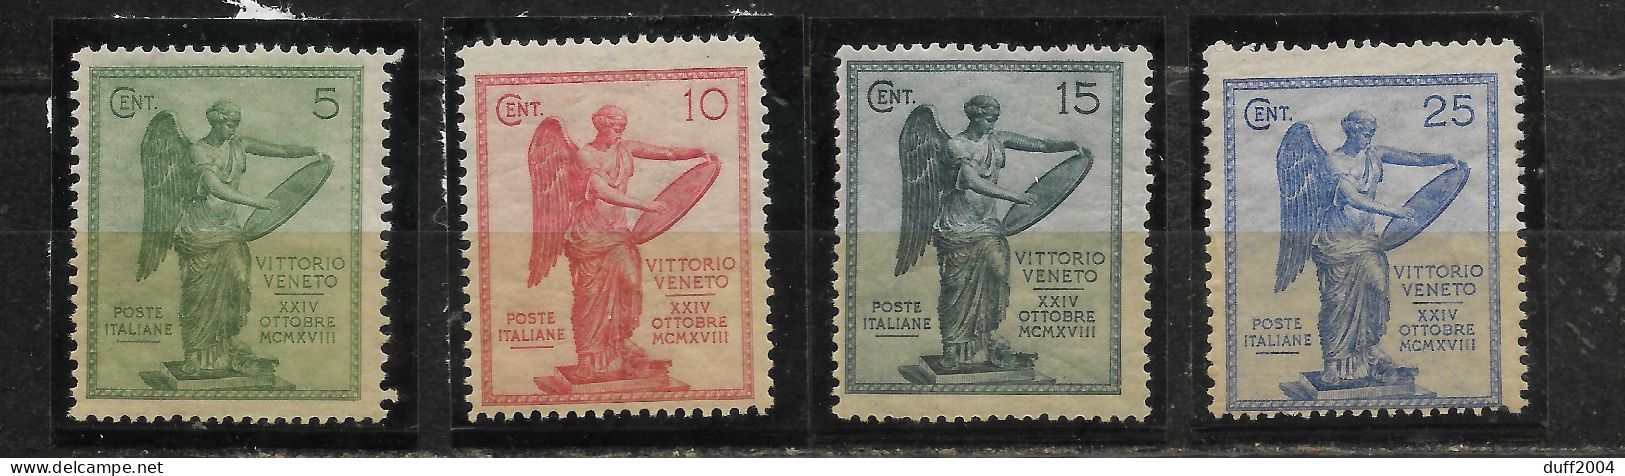 1921 - COMM.VITTORIA. - Mint/hinged